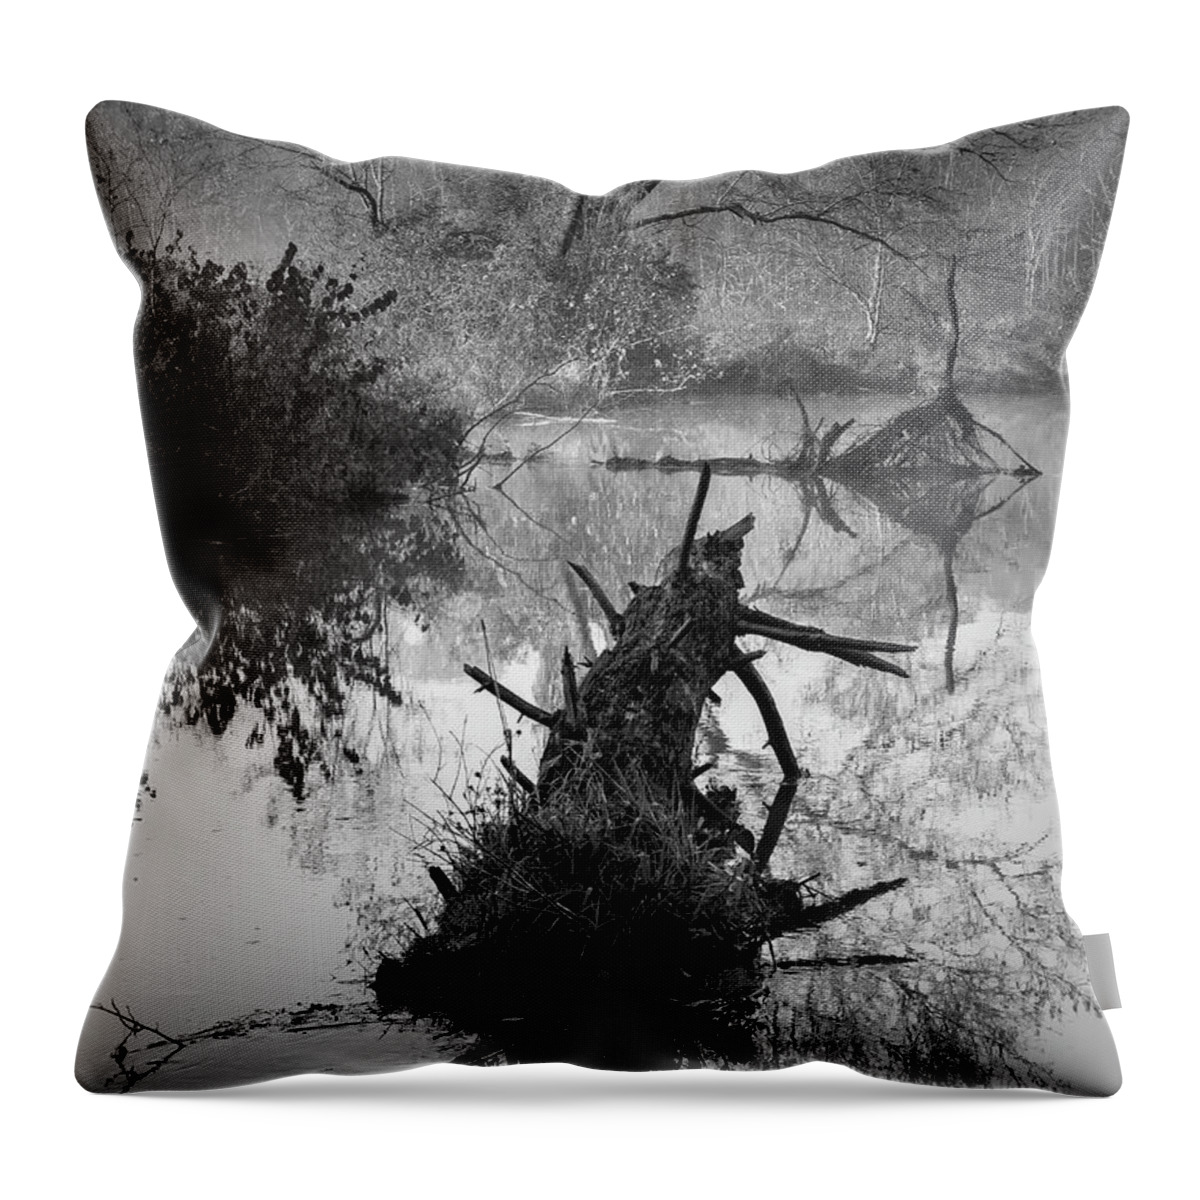 Black And White Throw Pillow featuring the photograph Boyden XX BW by David Gordon